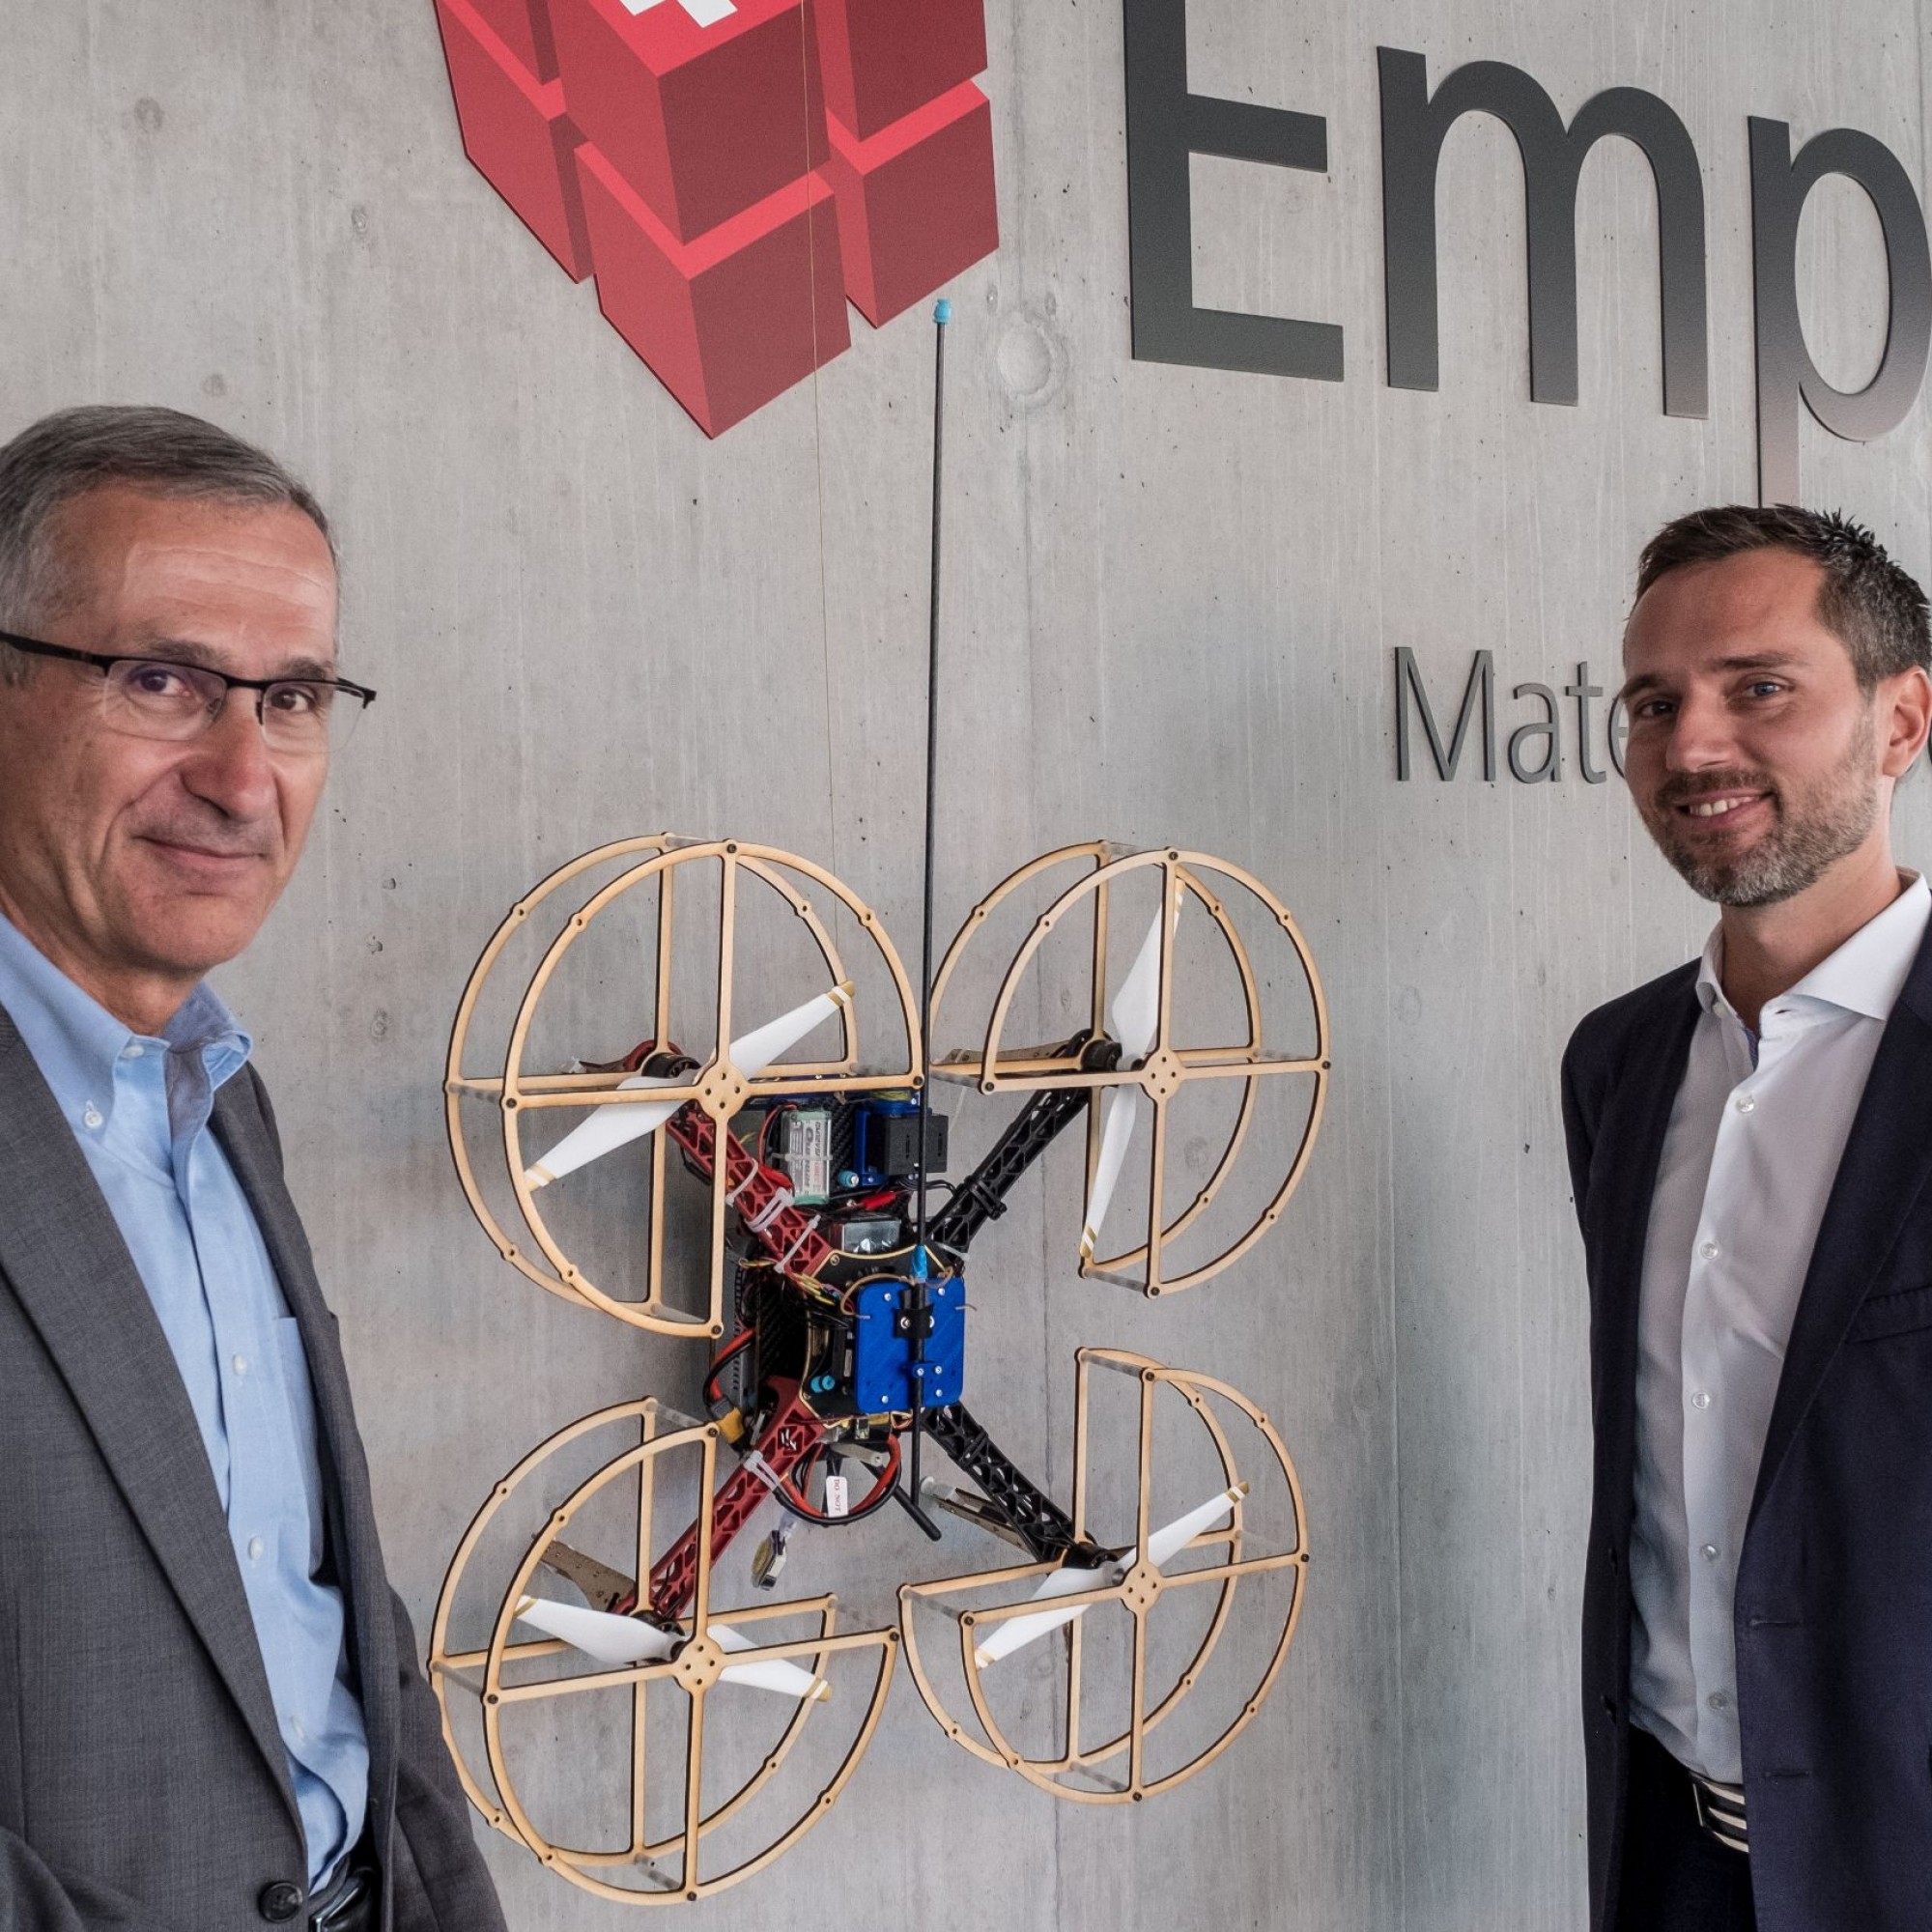 Gian-Luca Bona, CEO der Empa, und Mirko Kovac, Direktor des Aerial Robotics Lab am Imperial College London.